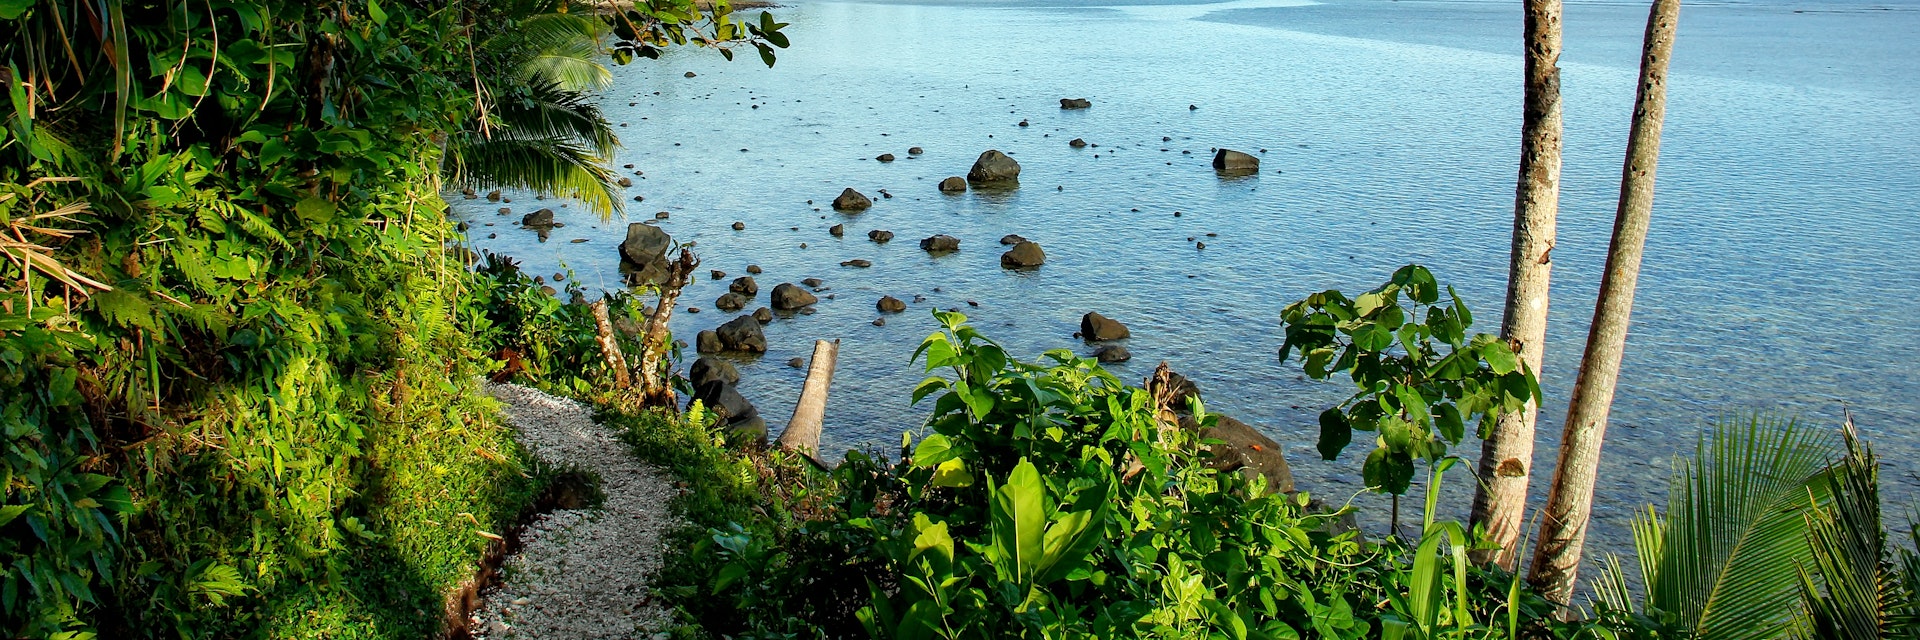 Ocean view along Lavena Costal Walk on Taveuni Island, Fiji. Taveuni is the third largest island in Fiji.